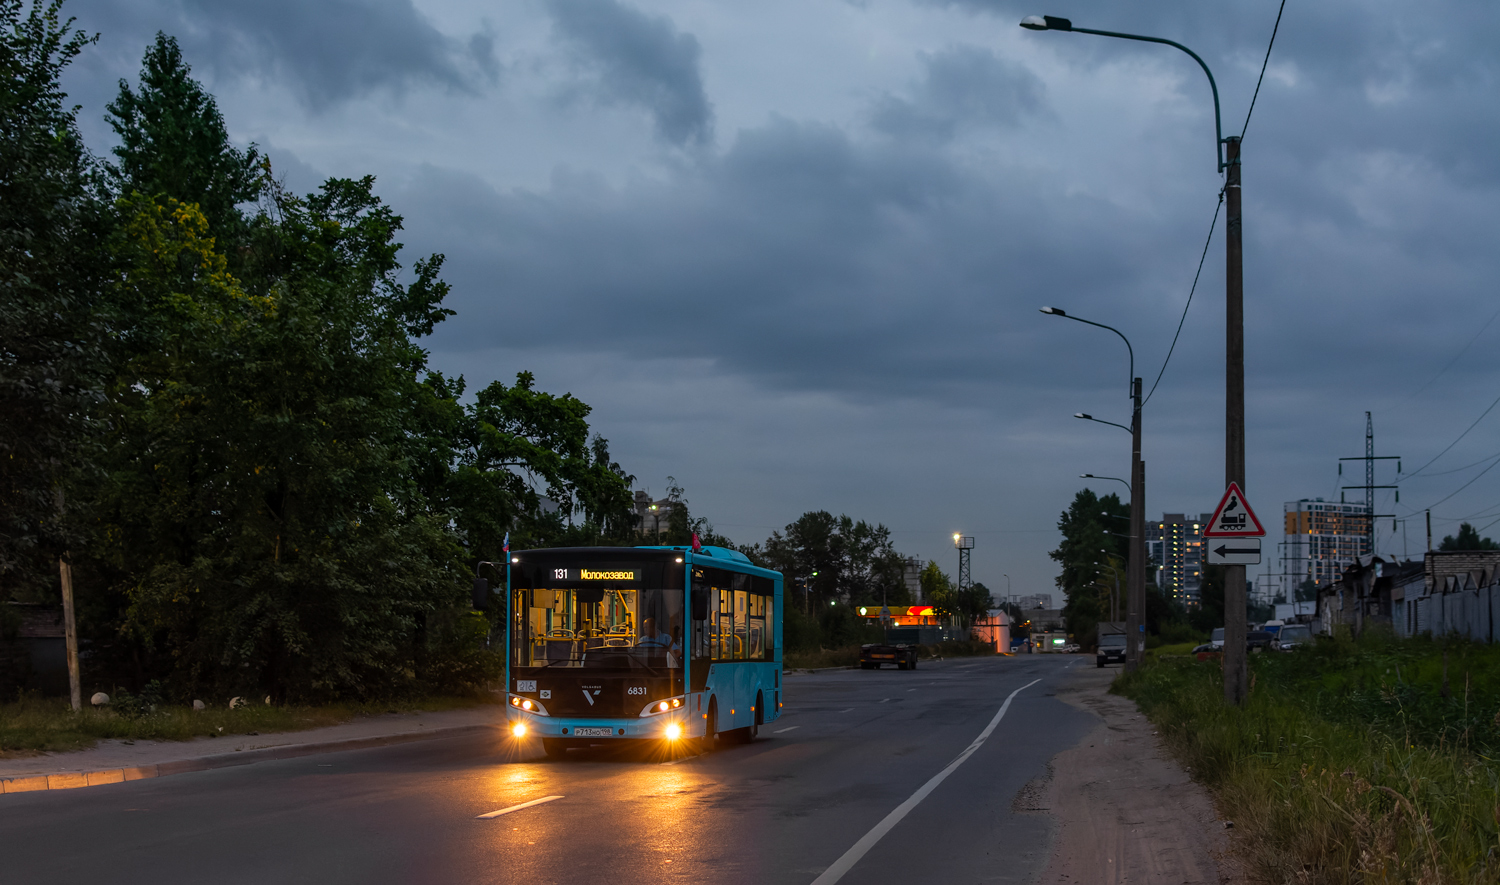 Petersburg, Volgabus-4298.G4 (LNG) # 6831